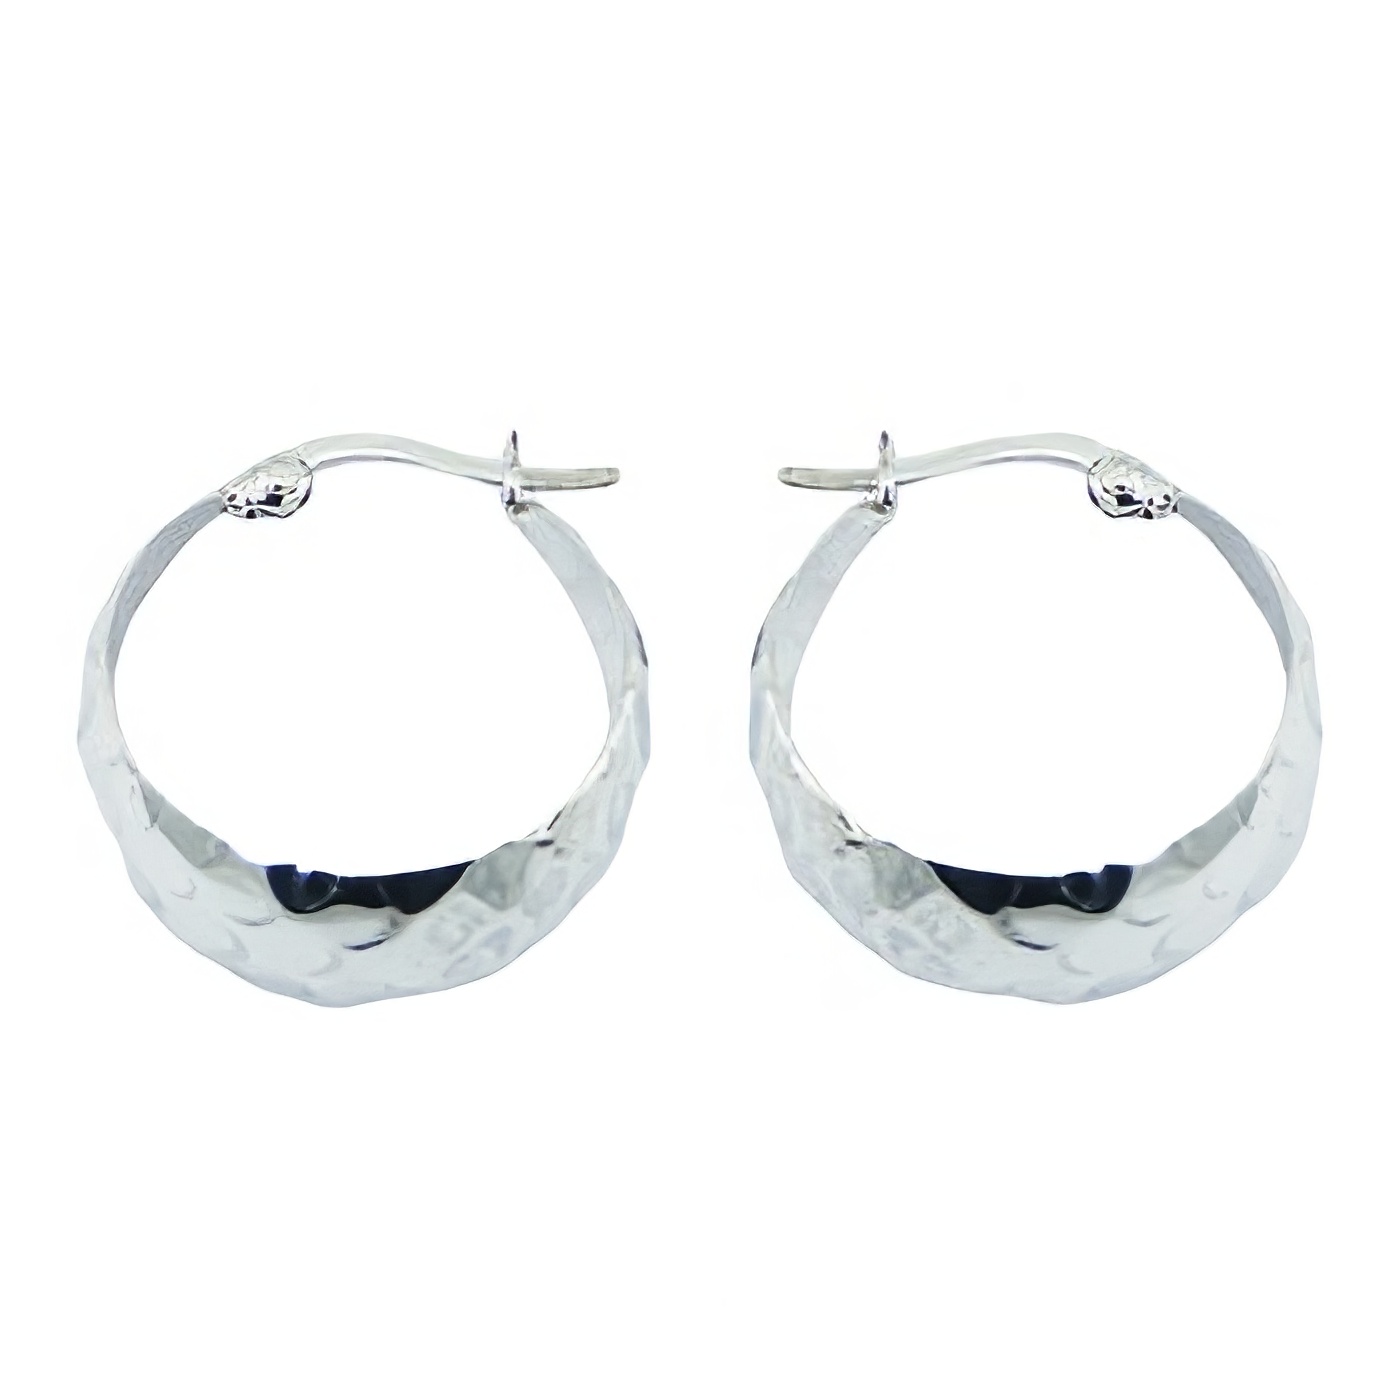 Hammered Plain 925 Sterling Silver Convexed Hoop Earrings by BeYindi 